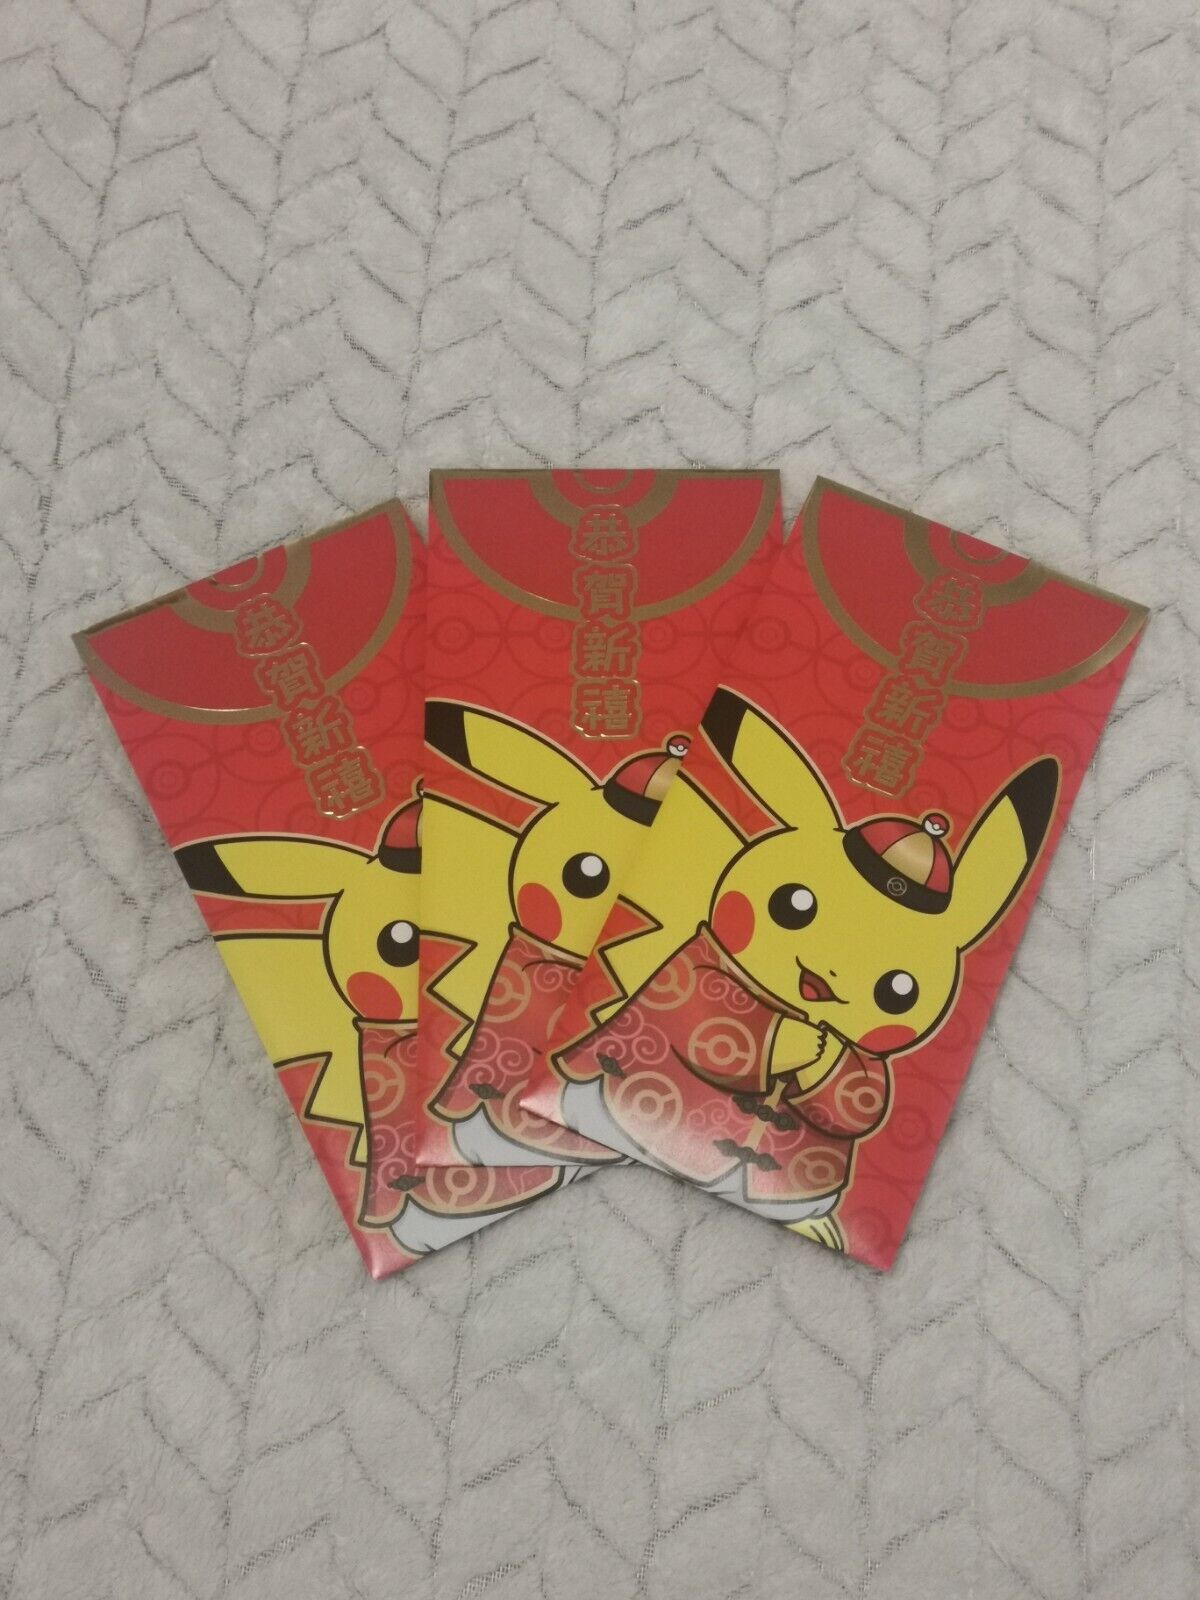 3X - Pokemon - Chinese Lunar New Year Pikachu Promo Card Red Packet Envelope 